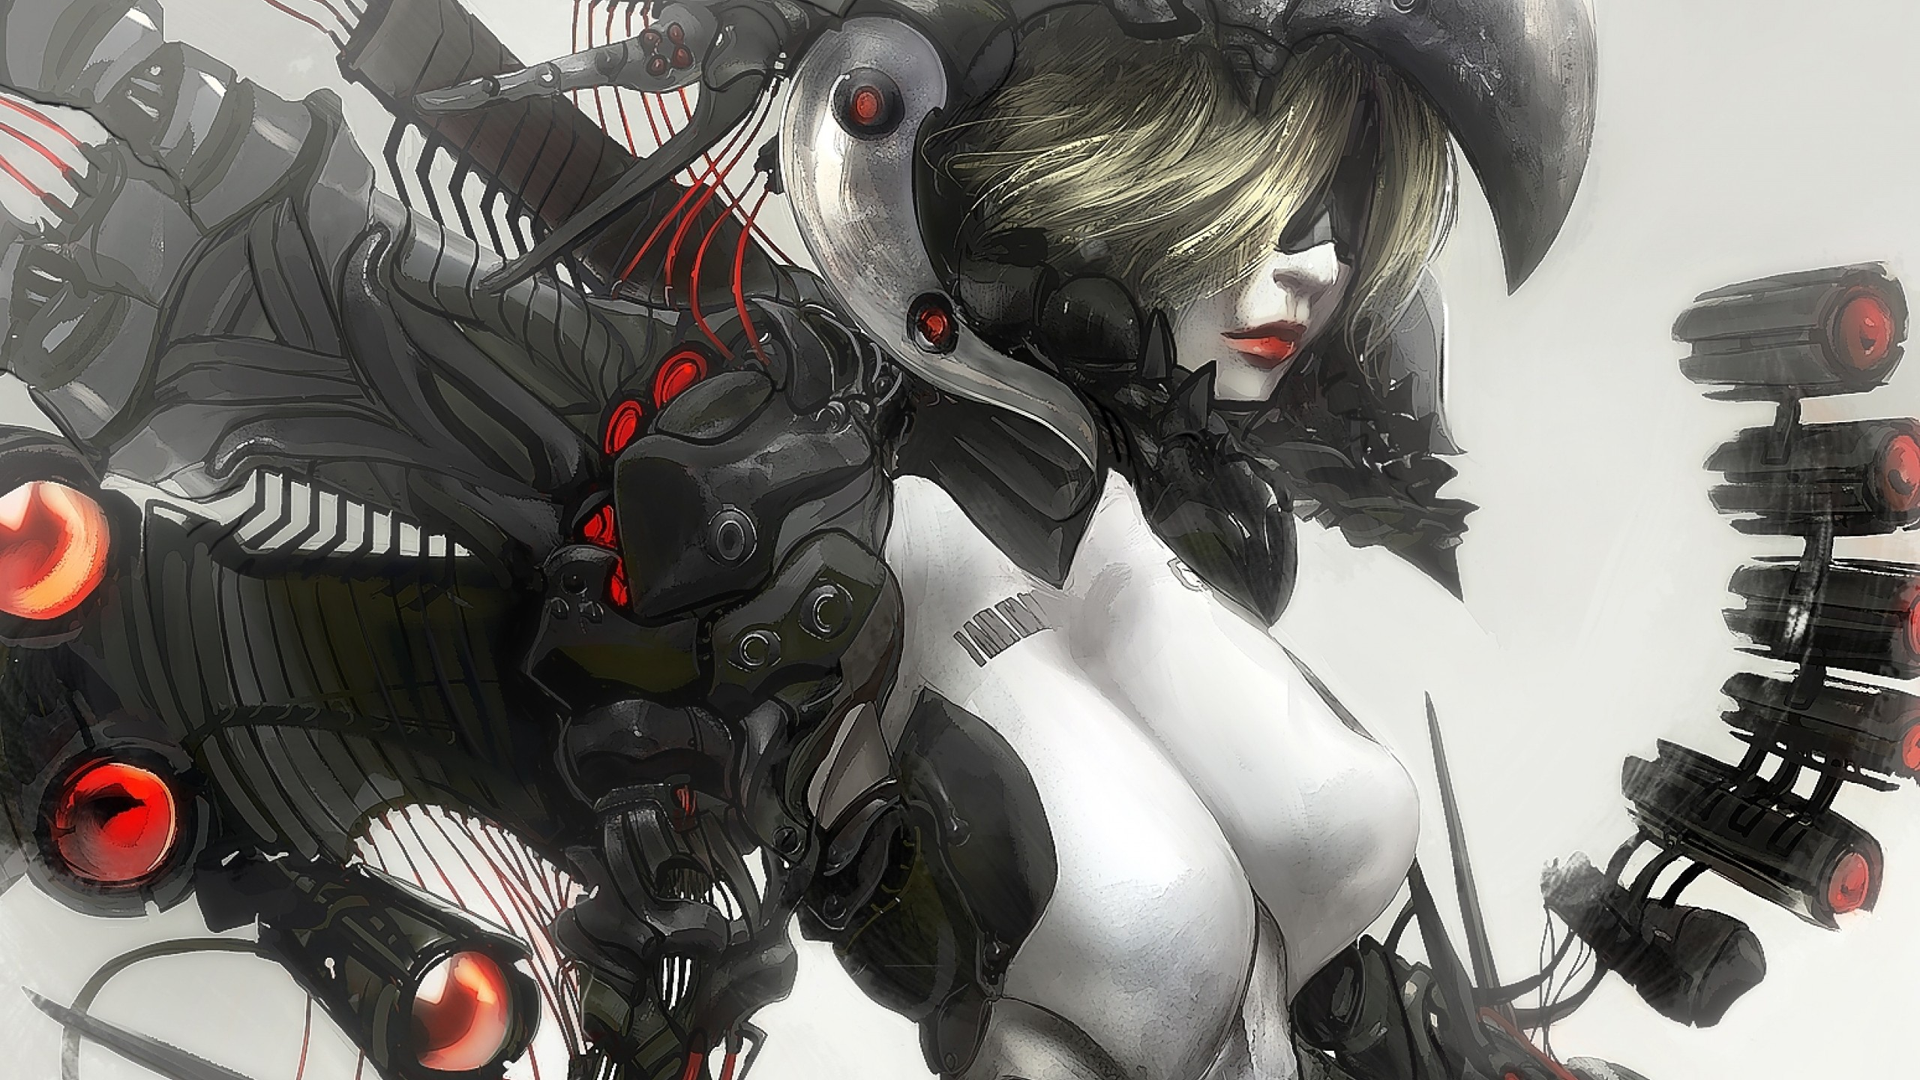 General 1920x1080 science fiction women cyborg artwork fantasy art androids science fiction women